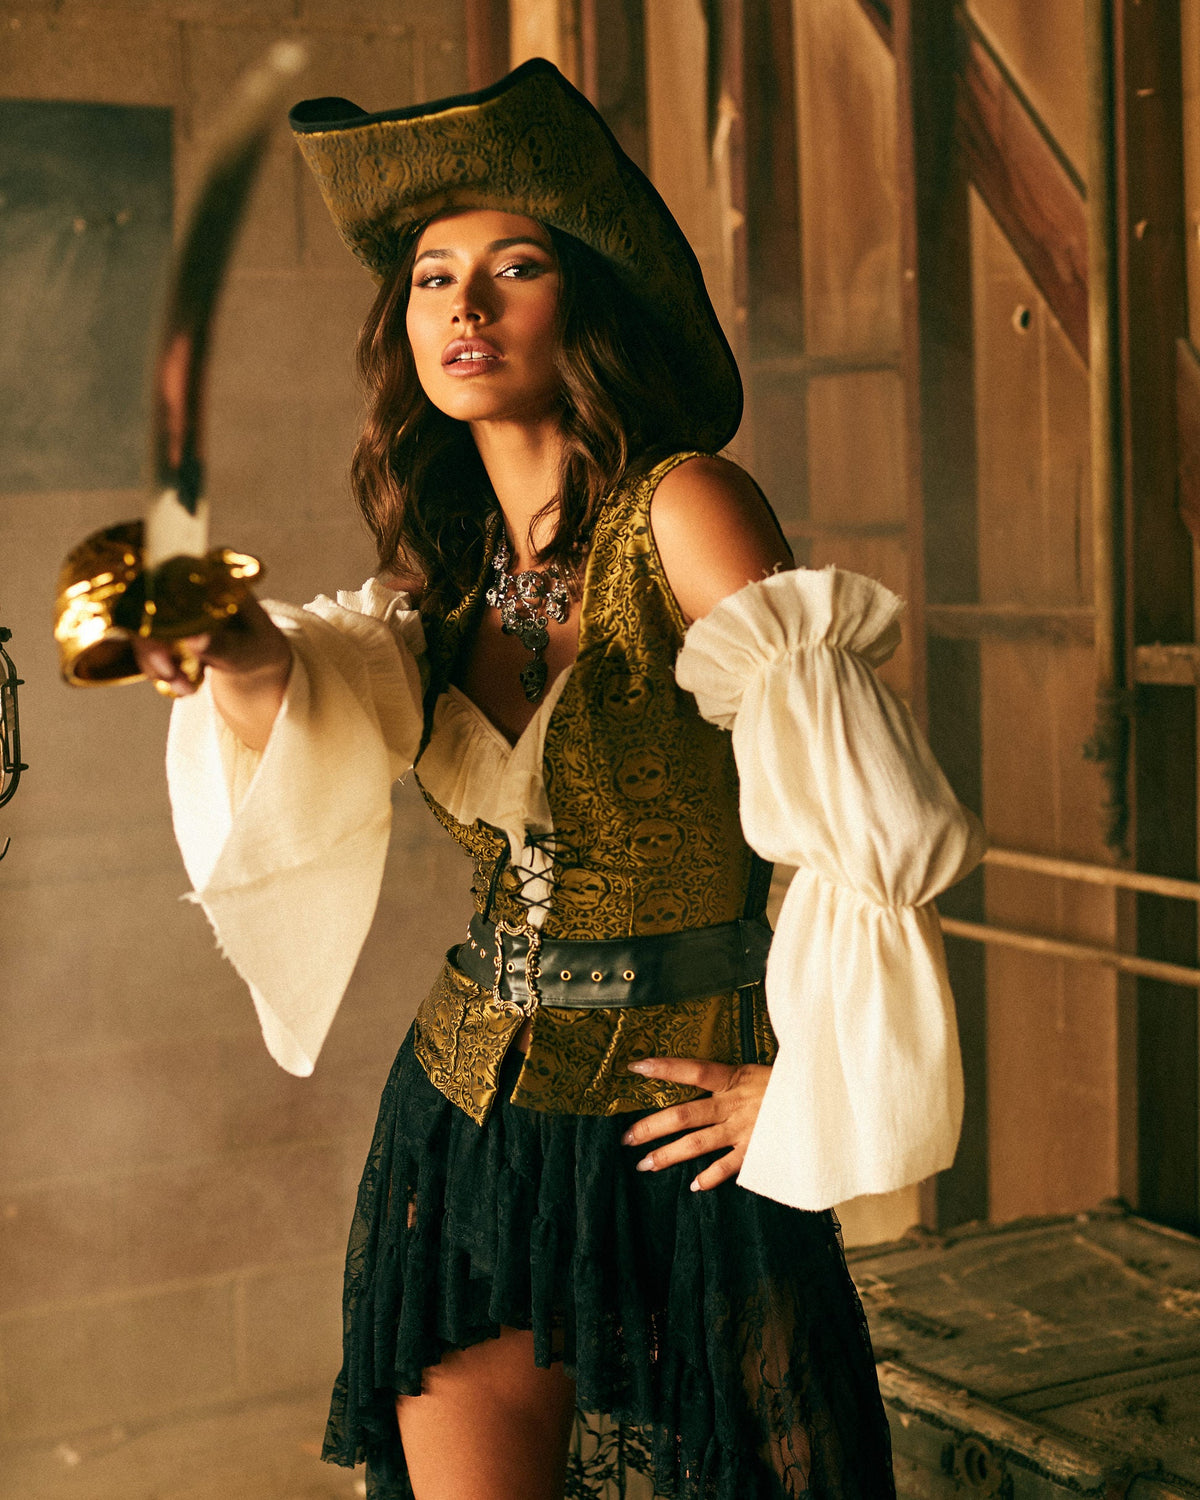 6pc Pirate Queen Costume-Roma Costume